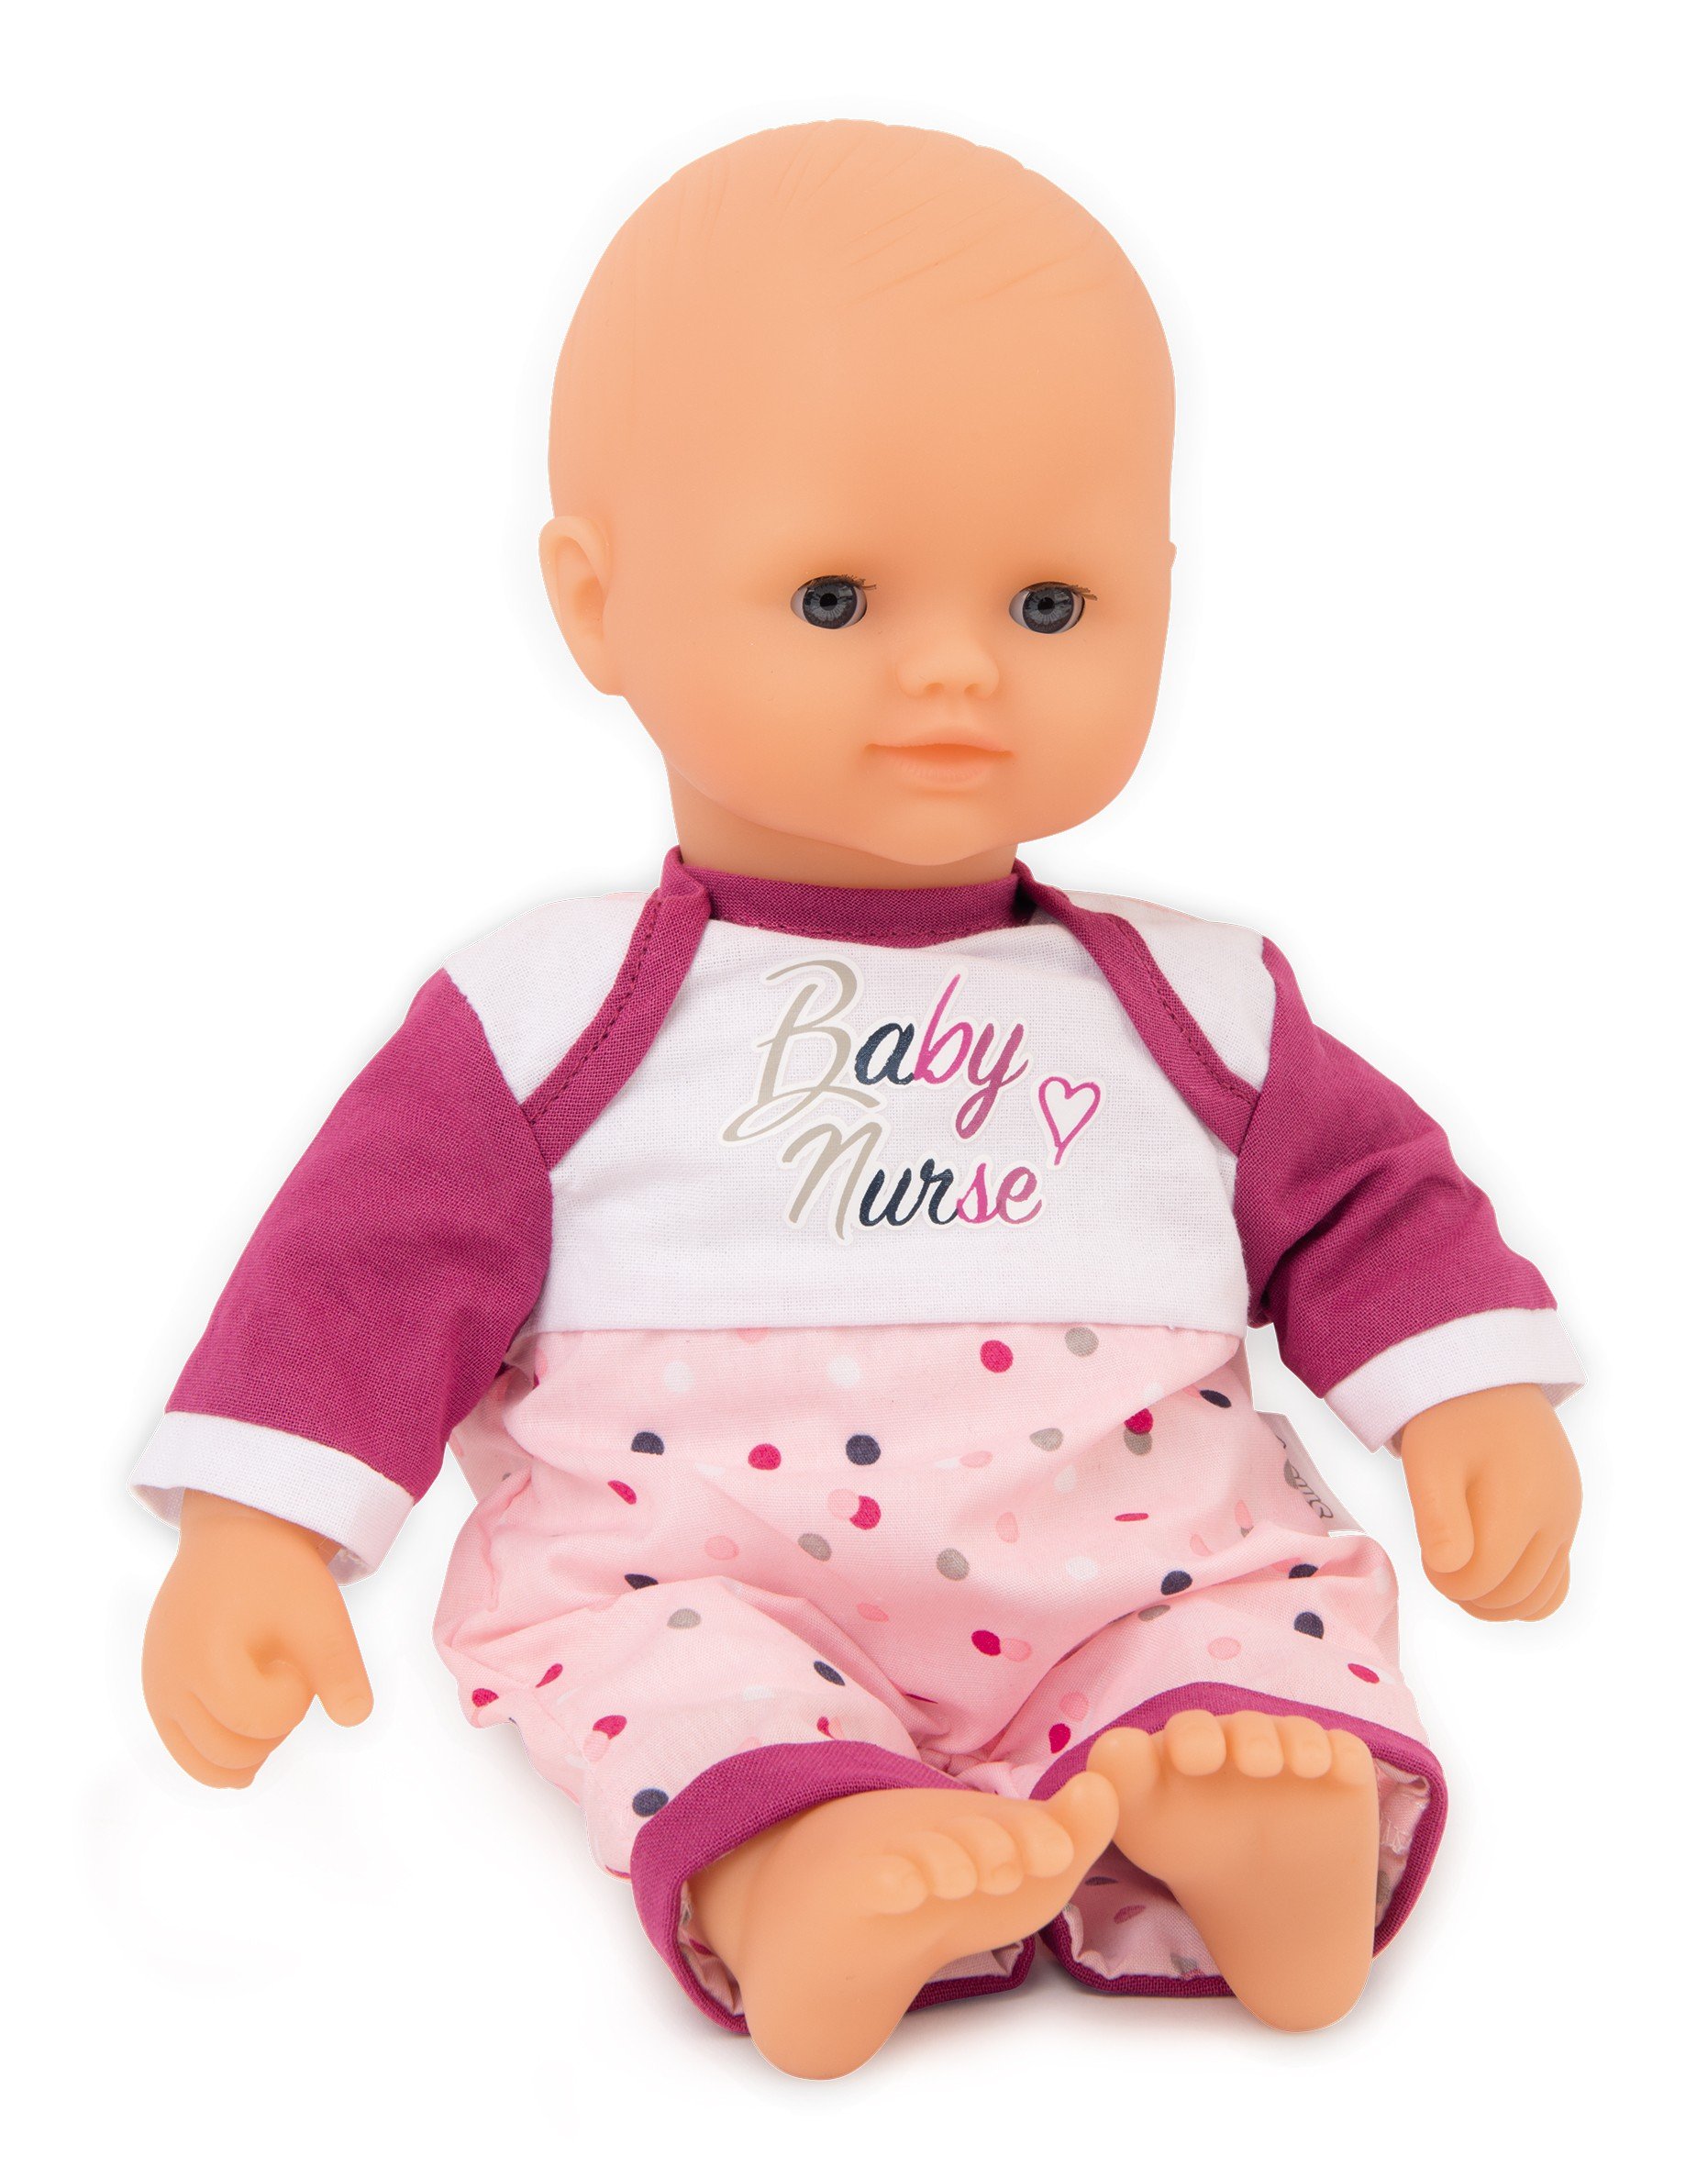 Smoby - Baby Nurse - Doll, 32 cm (I-7220102)